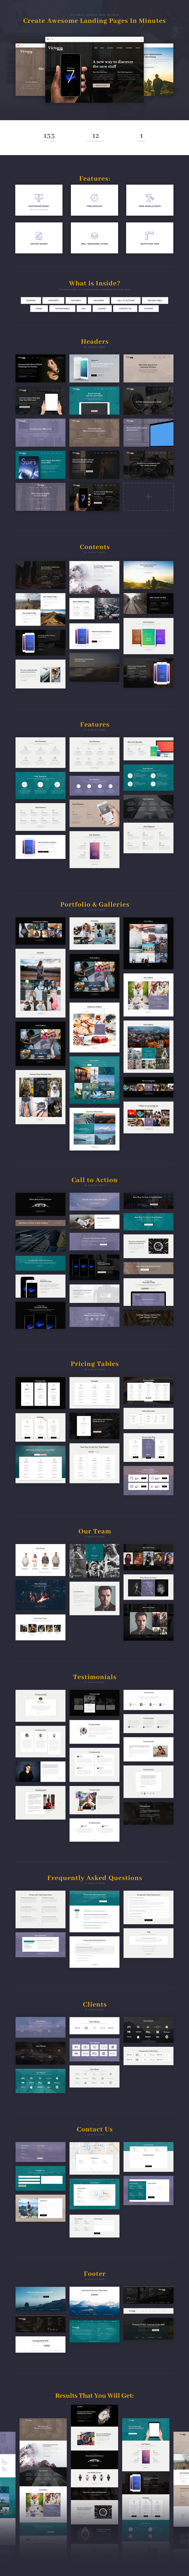 Web Design  websites elements photoshop ui kit landing page download Create user interface presentation